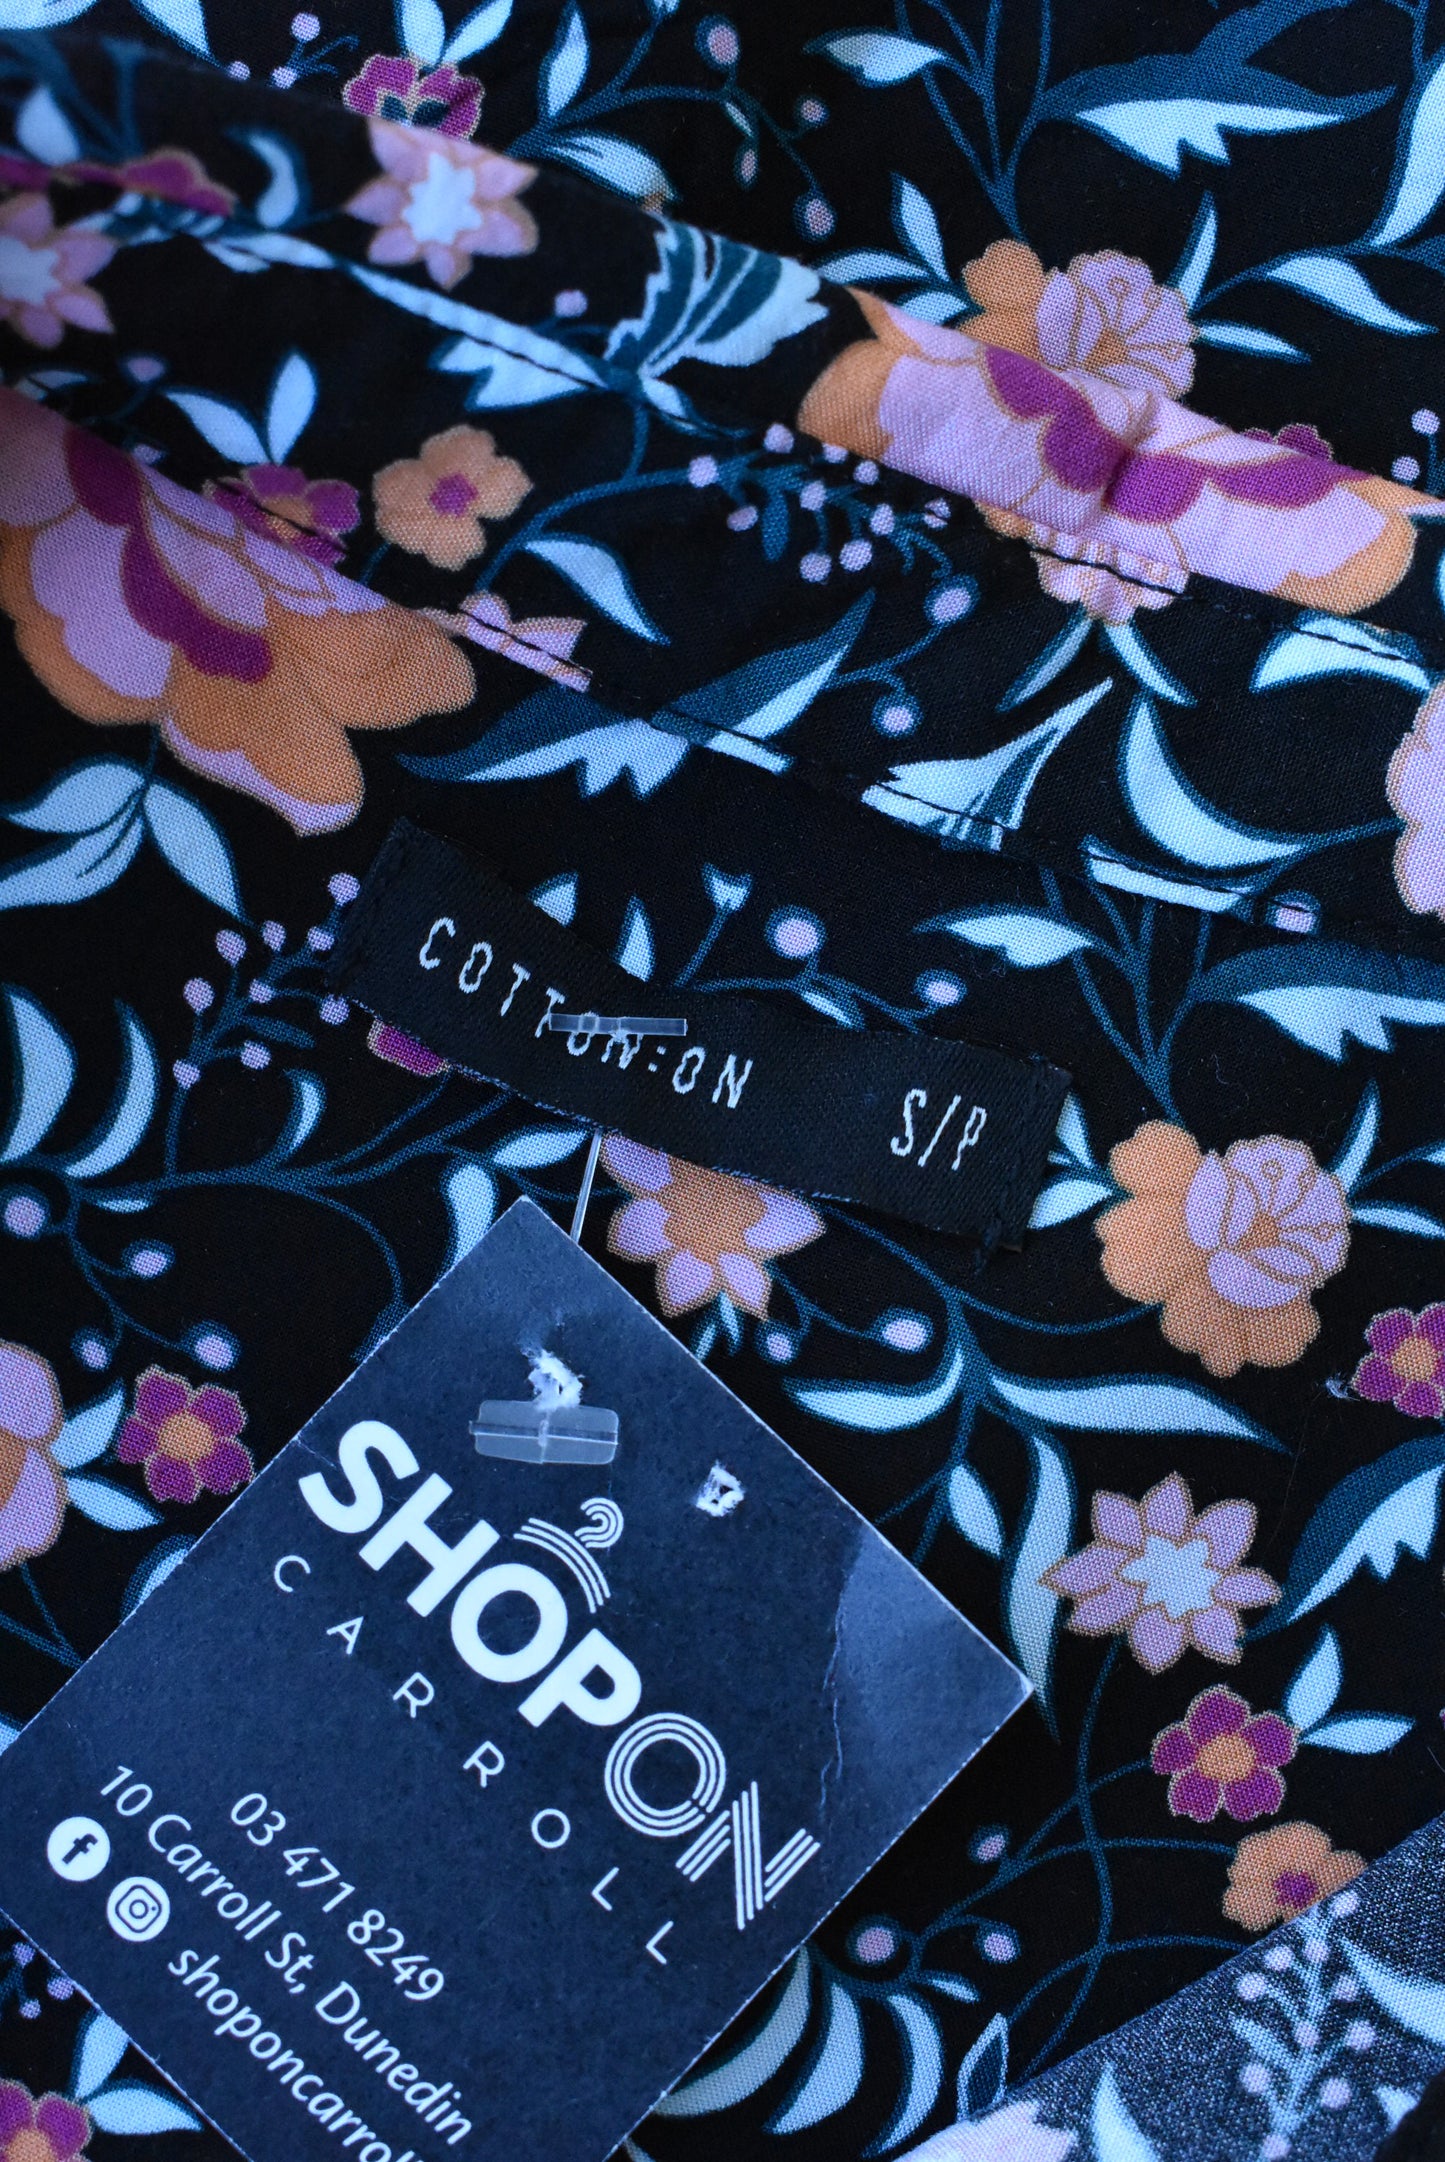 Cotton On dark floral shirt, size S/P